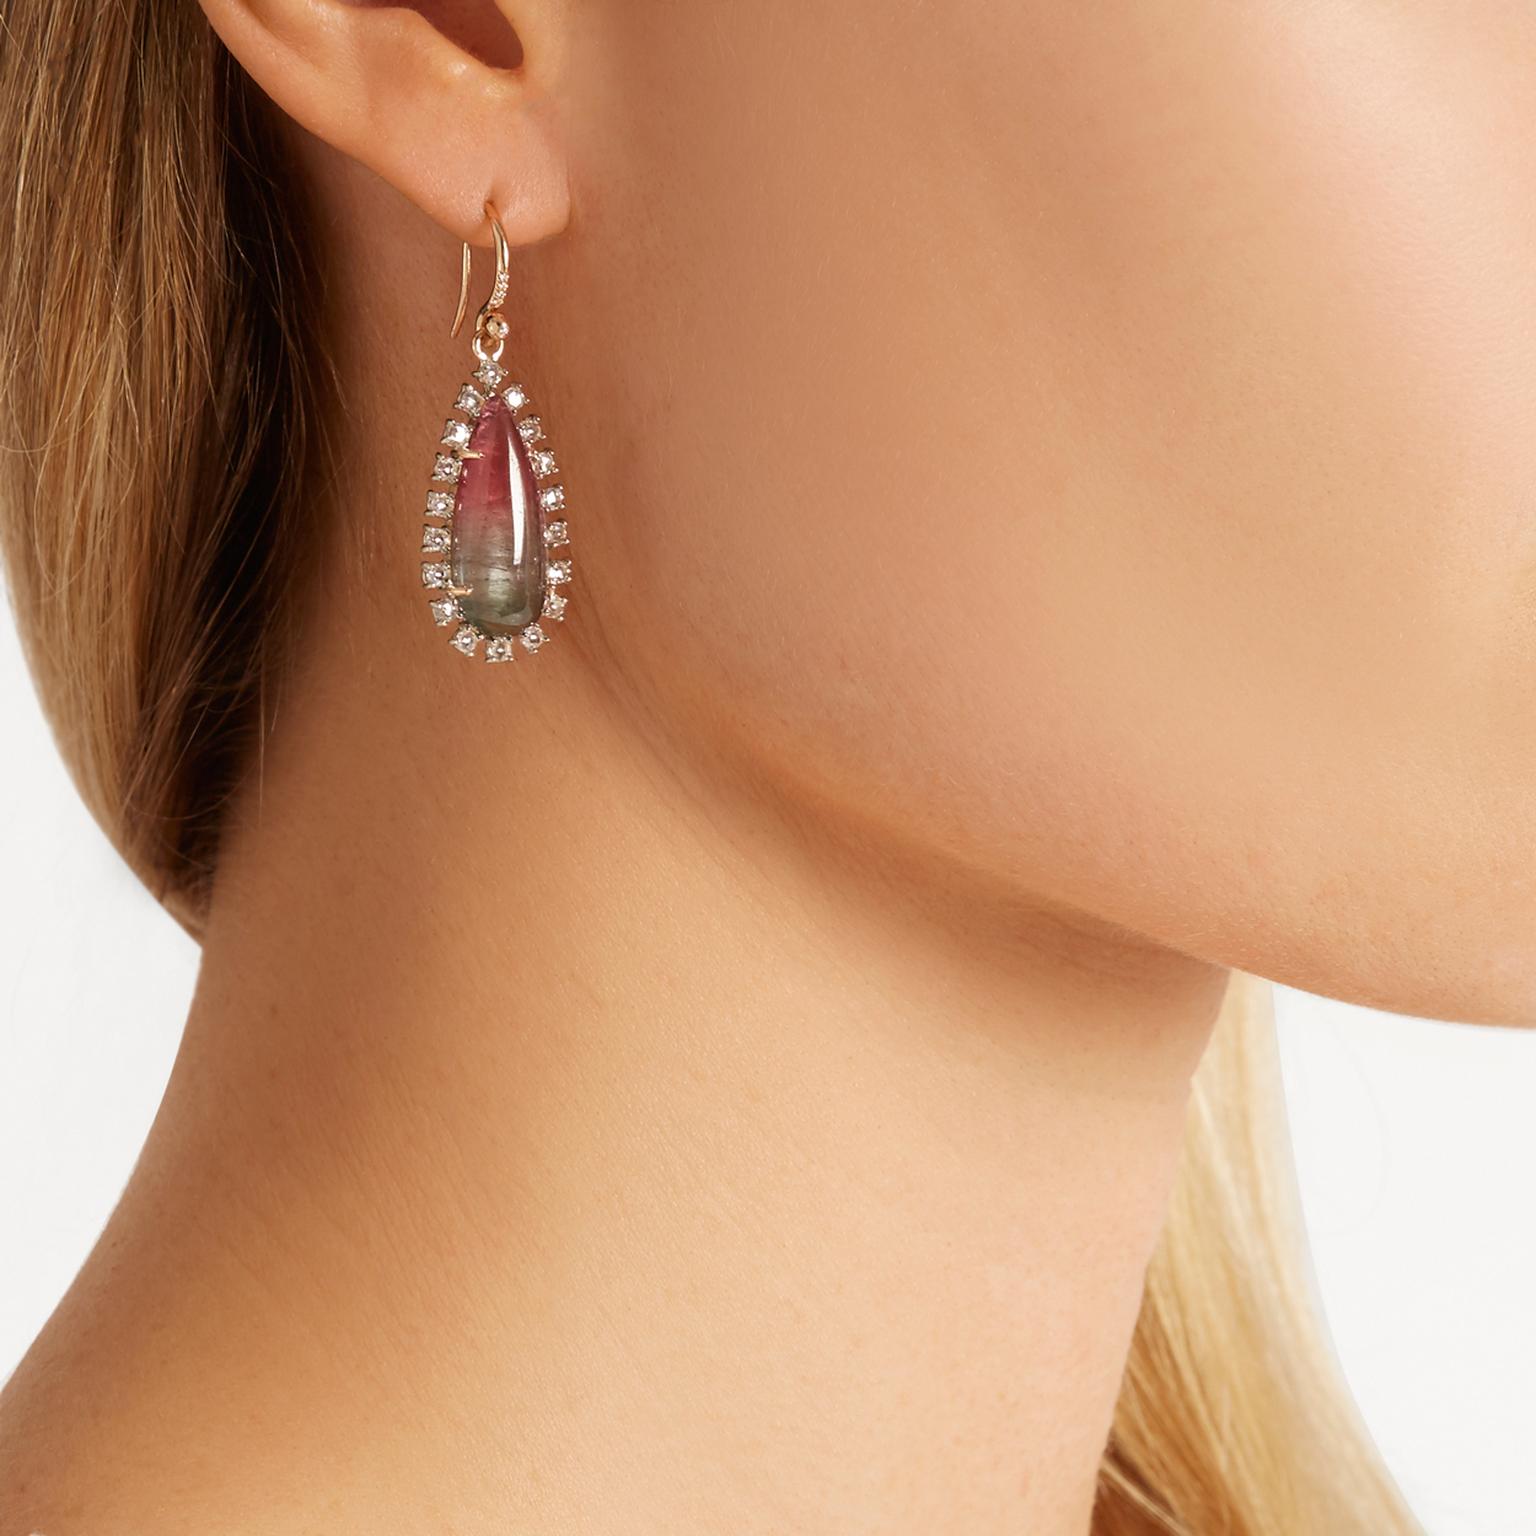 Irene Neuwirth watermelon tourmaline earrings